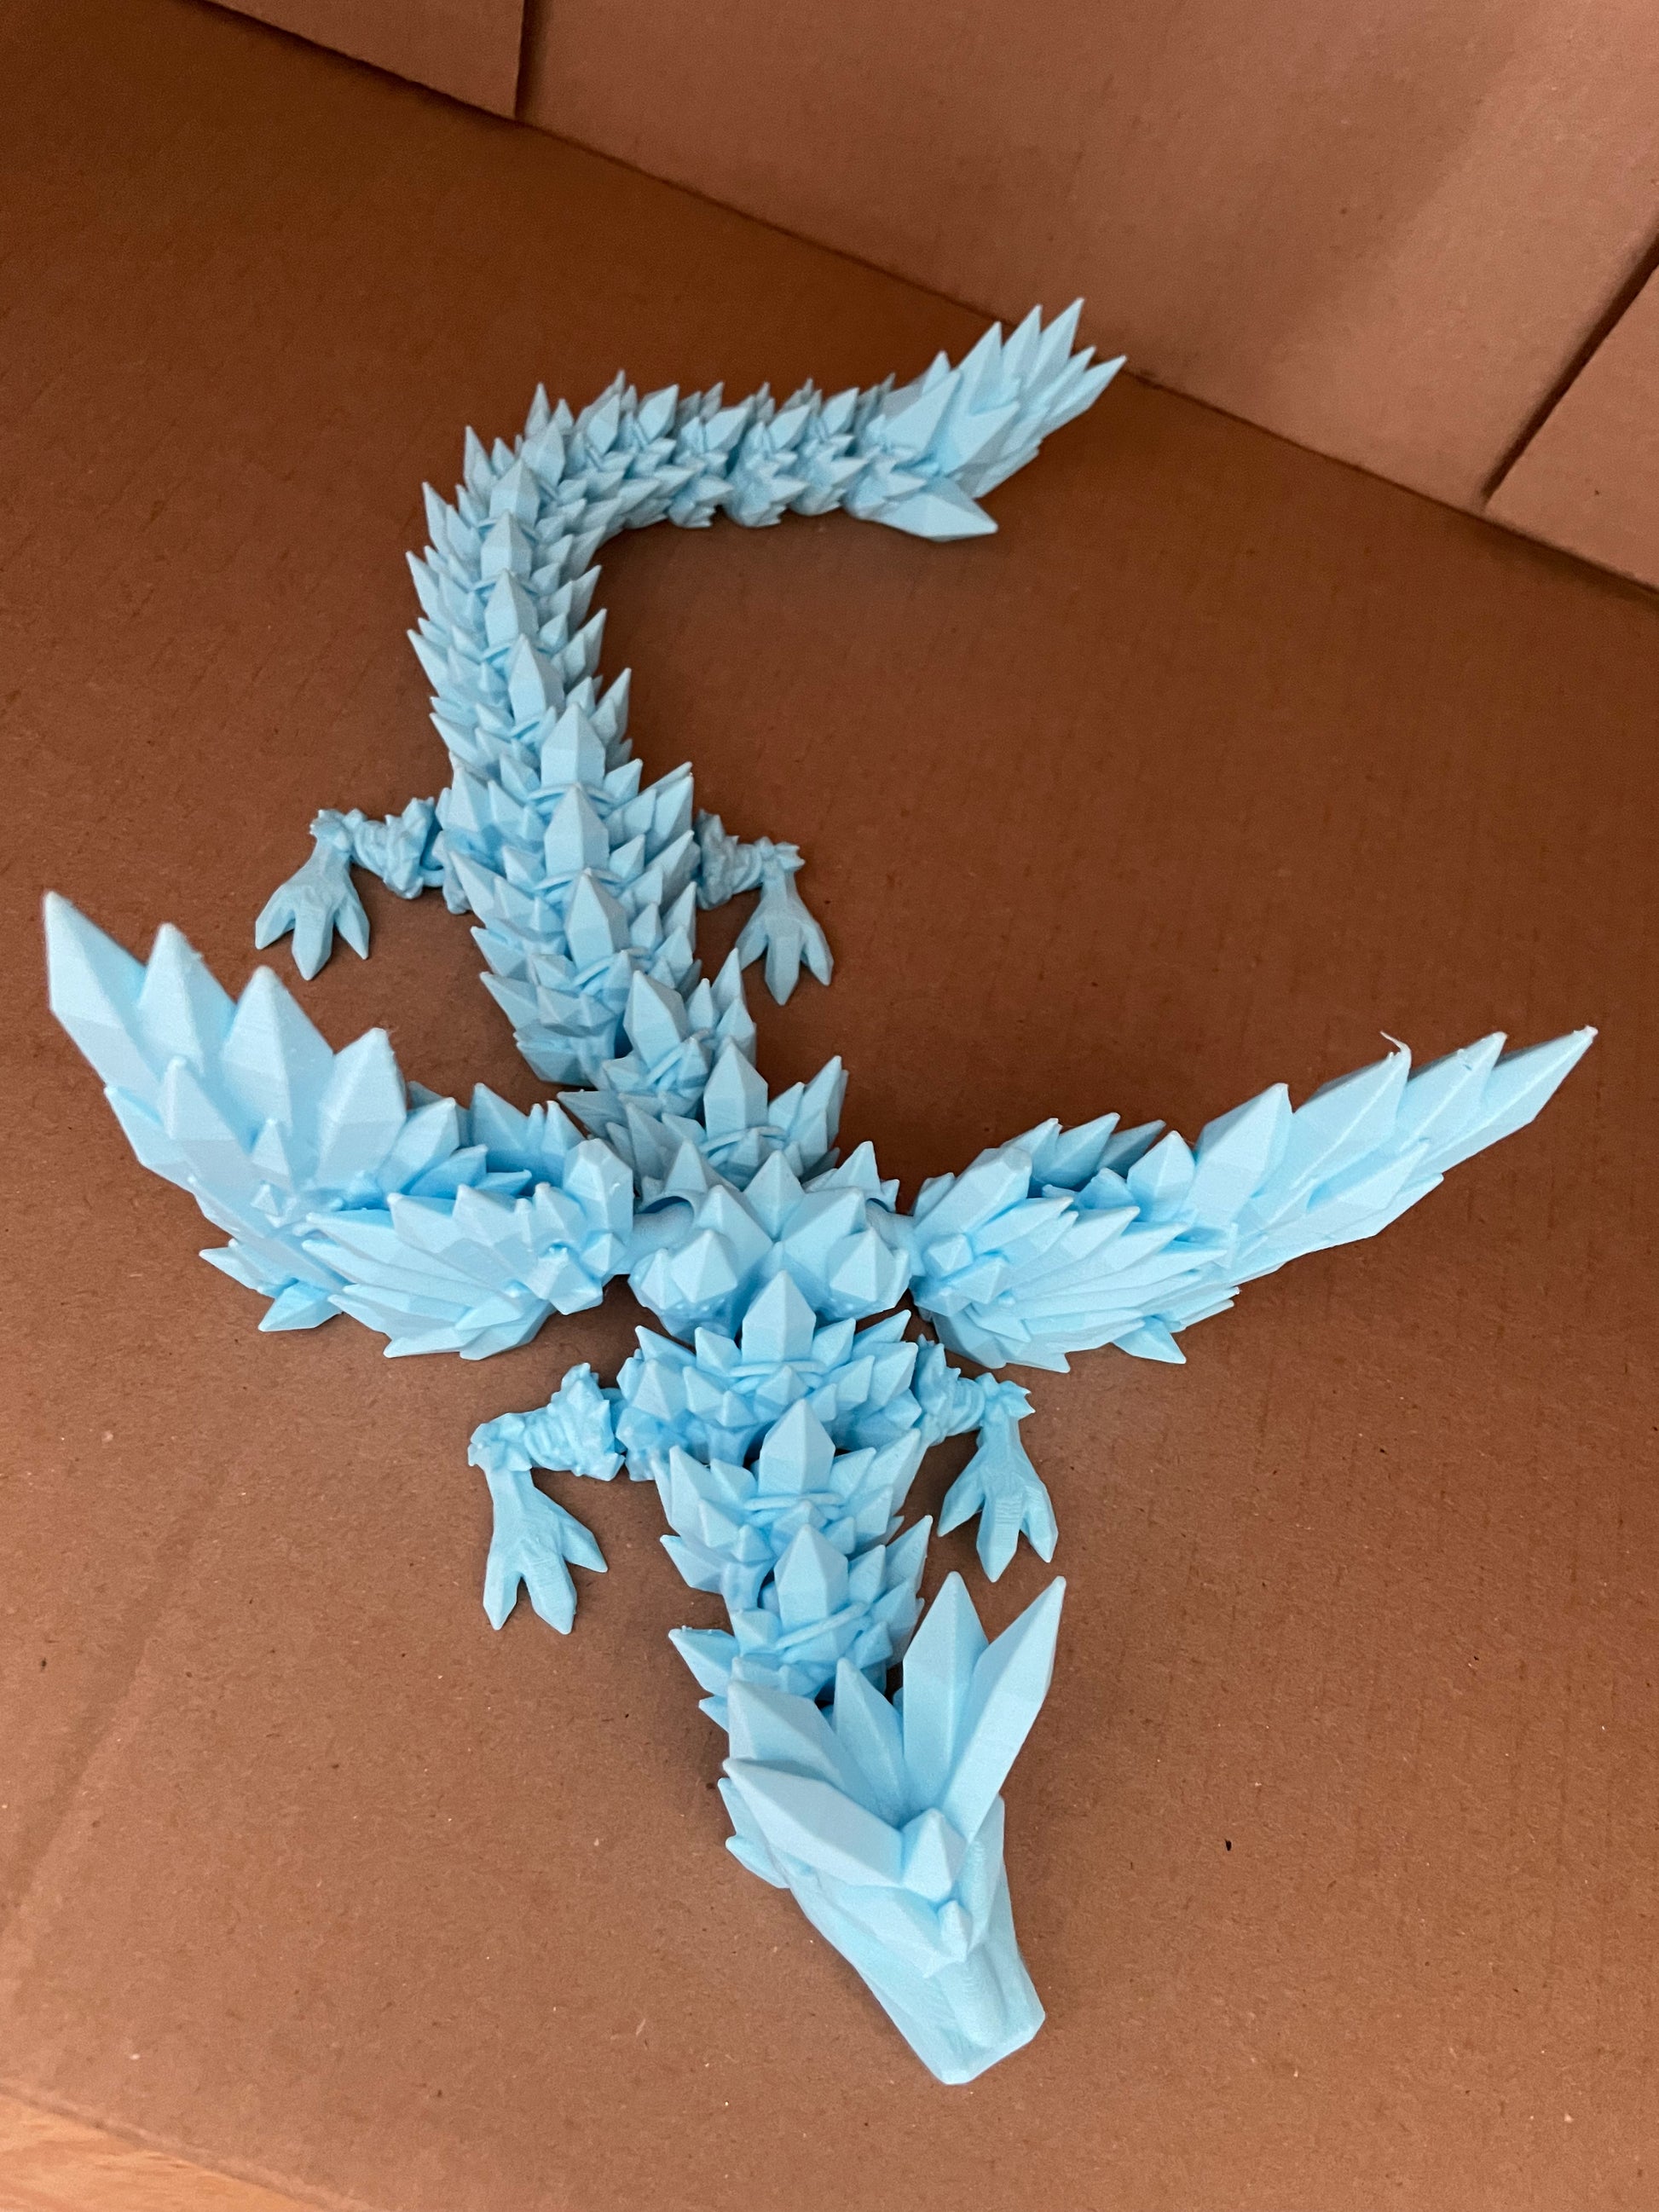 Crystal wings dragon 3D print – keats woodworking